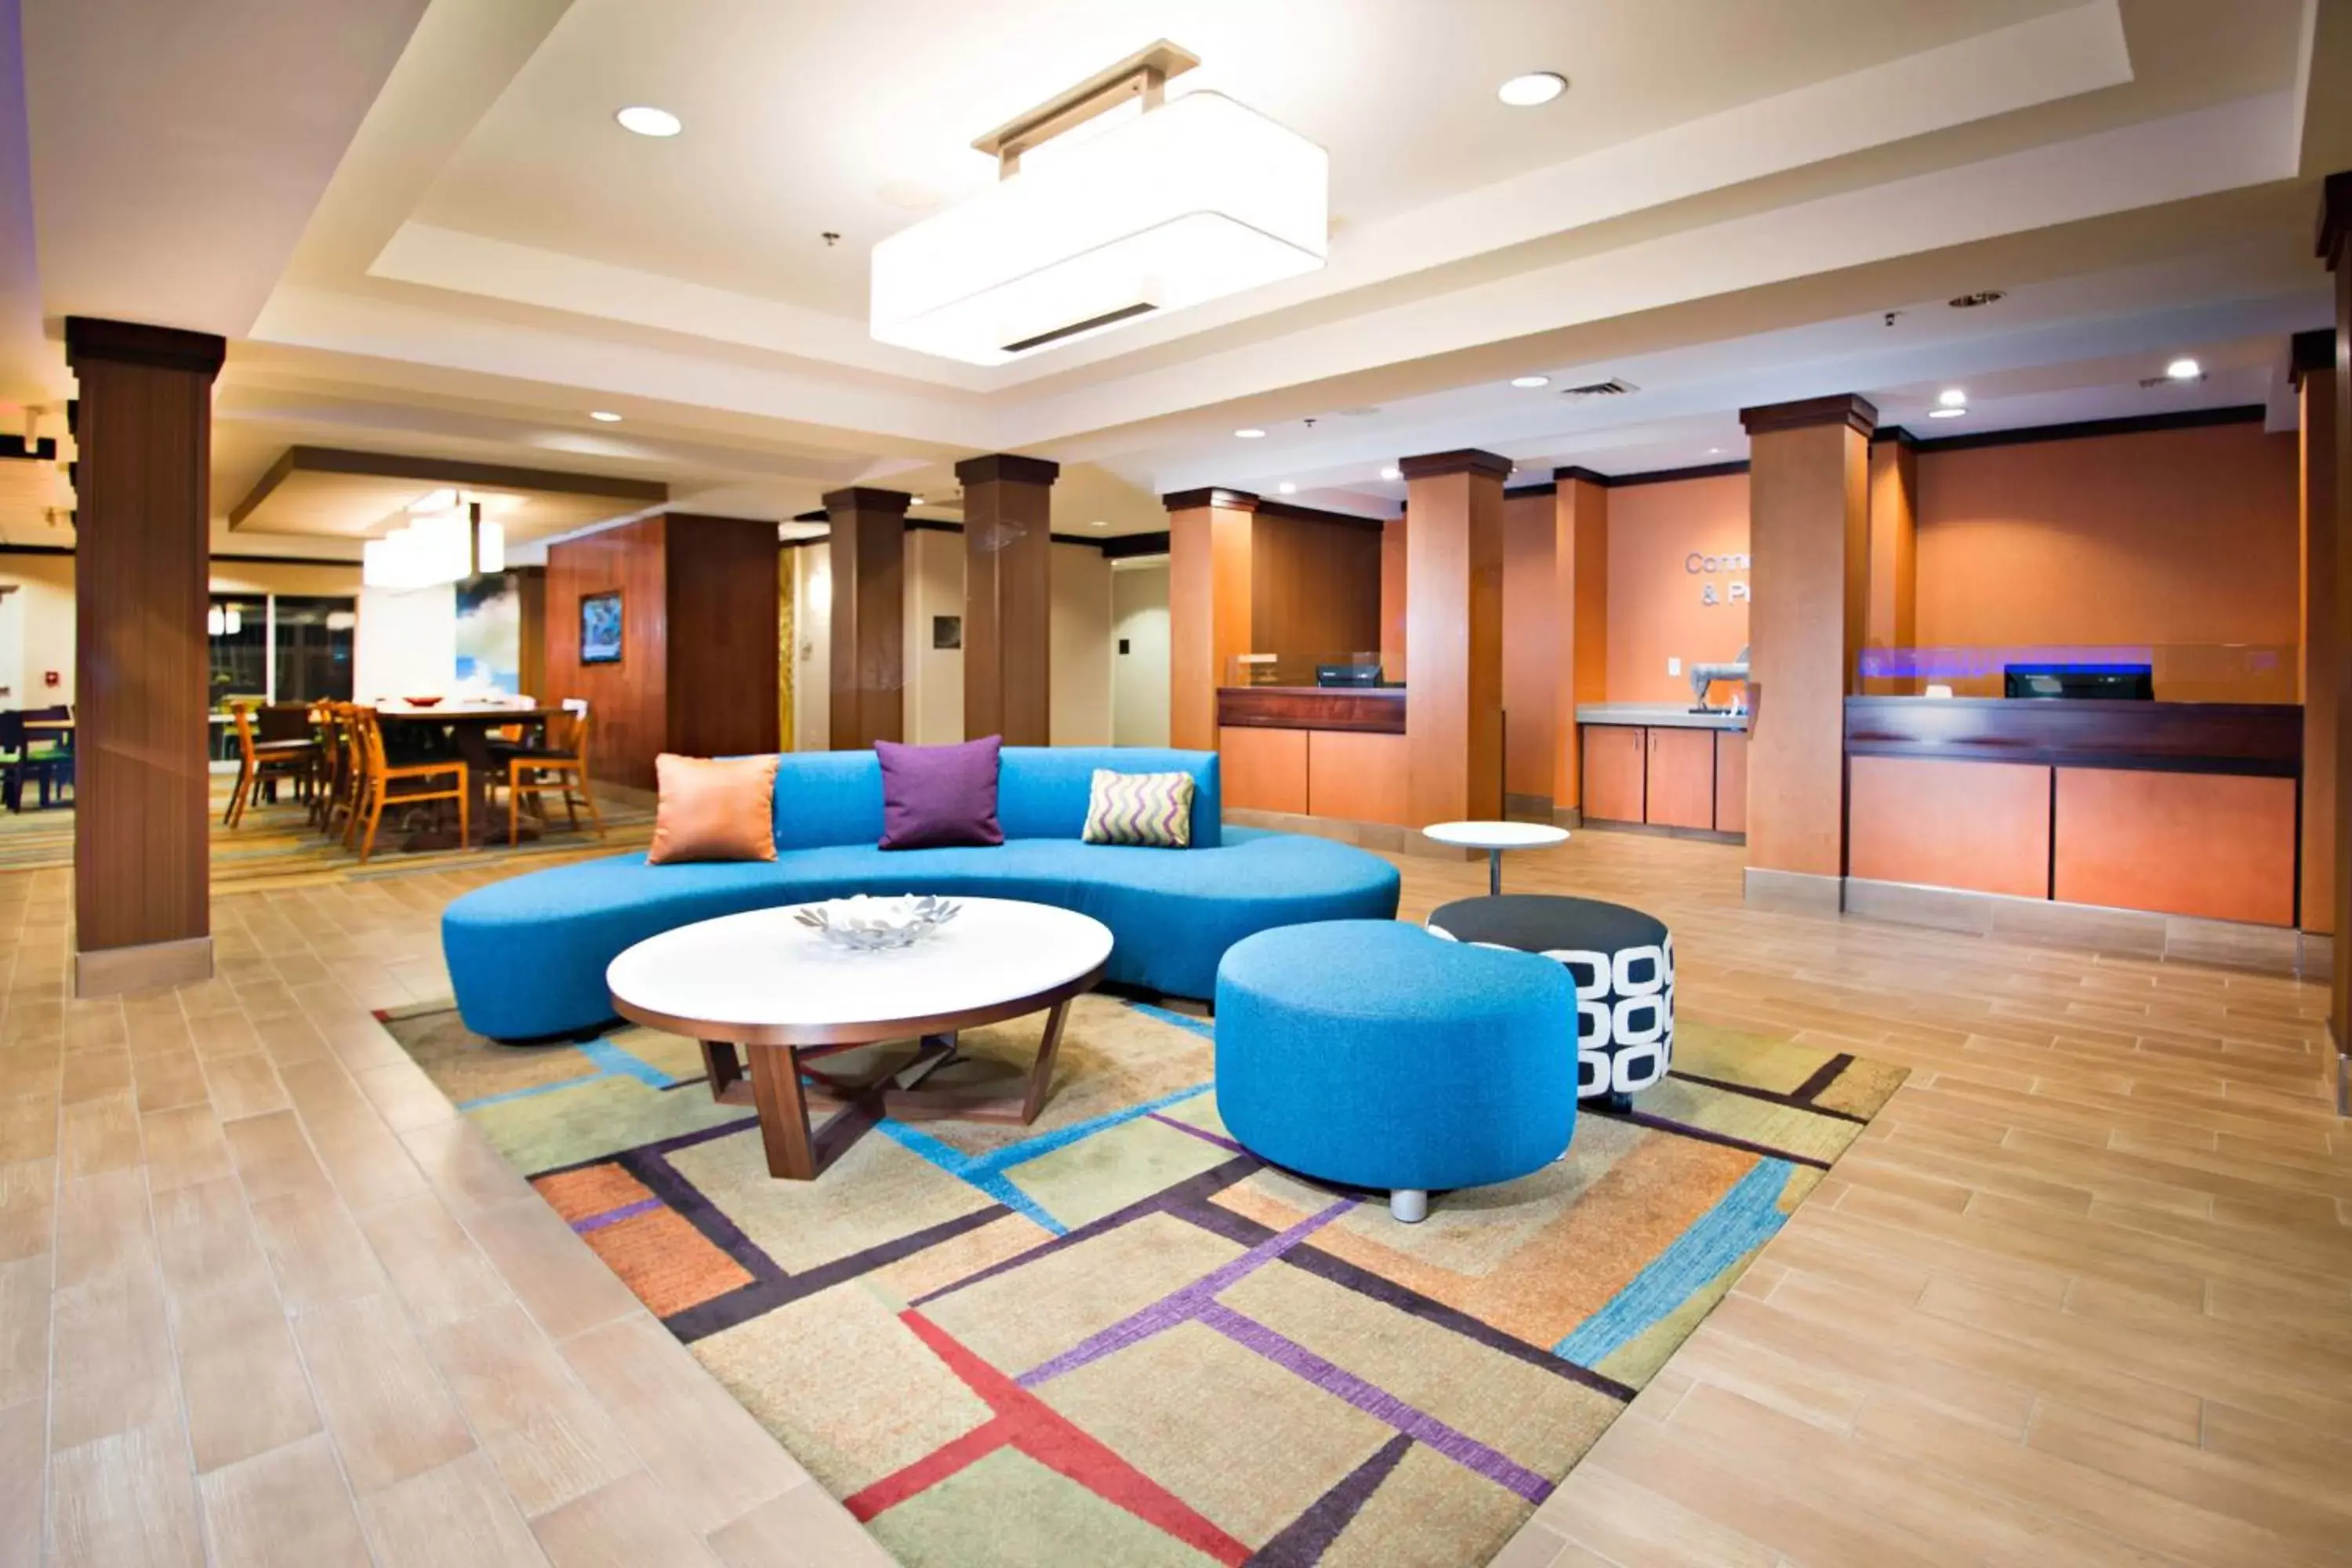 Lobby or reception in Fairfield Inn & Suites Idaho Falls